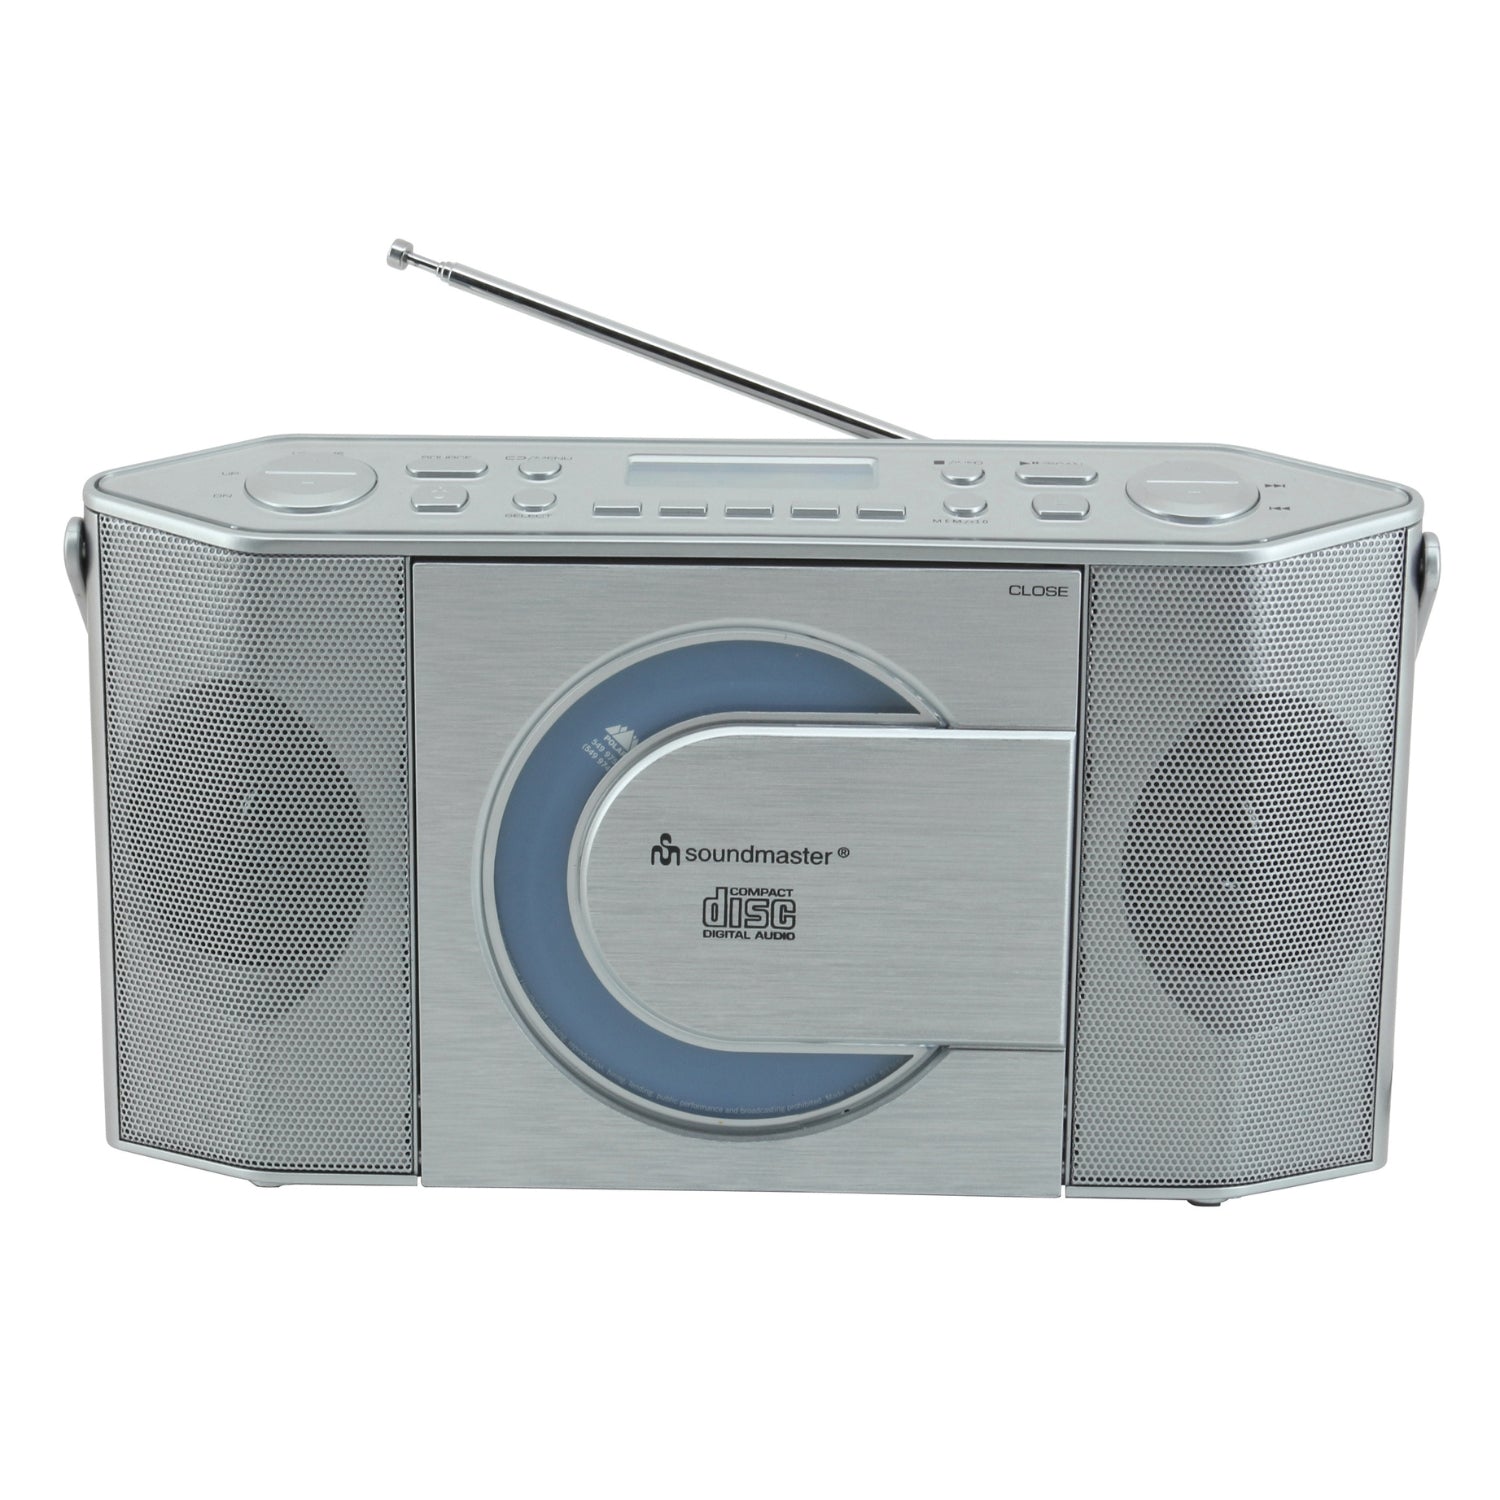 Soundmaster RCD1770SI digital radio radio recorder DAB+ with USB and CD player MP3 headphones clock